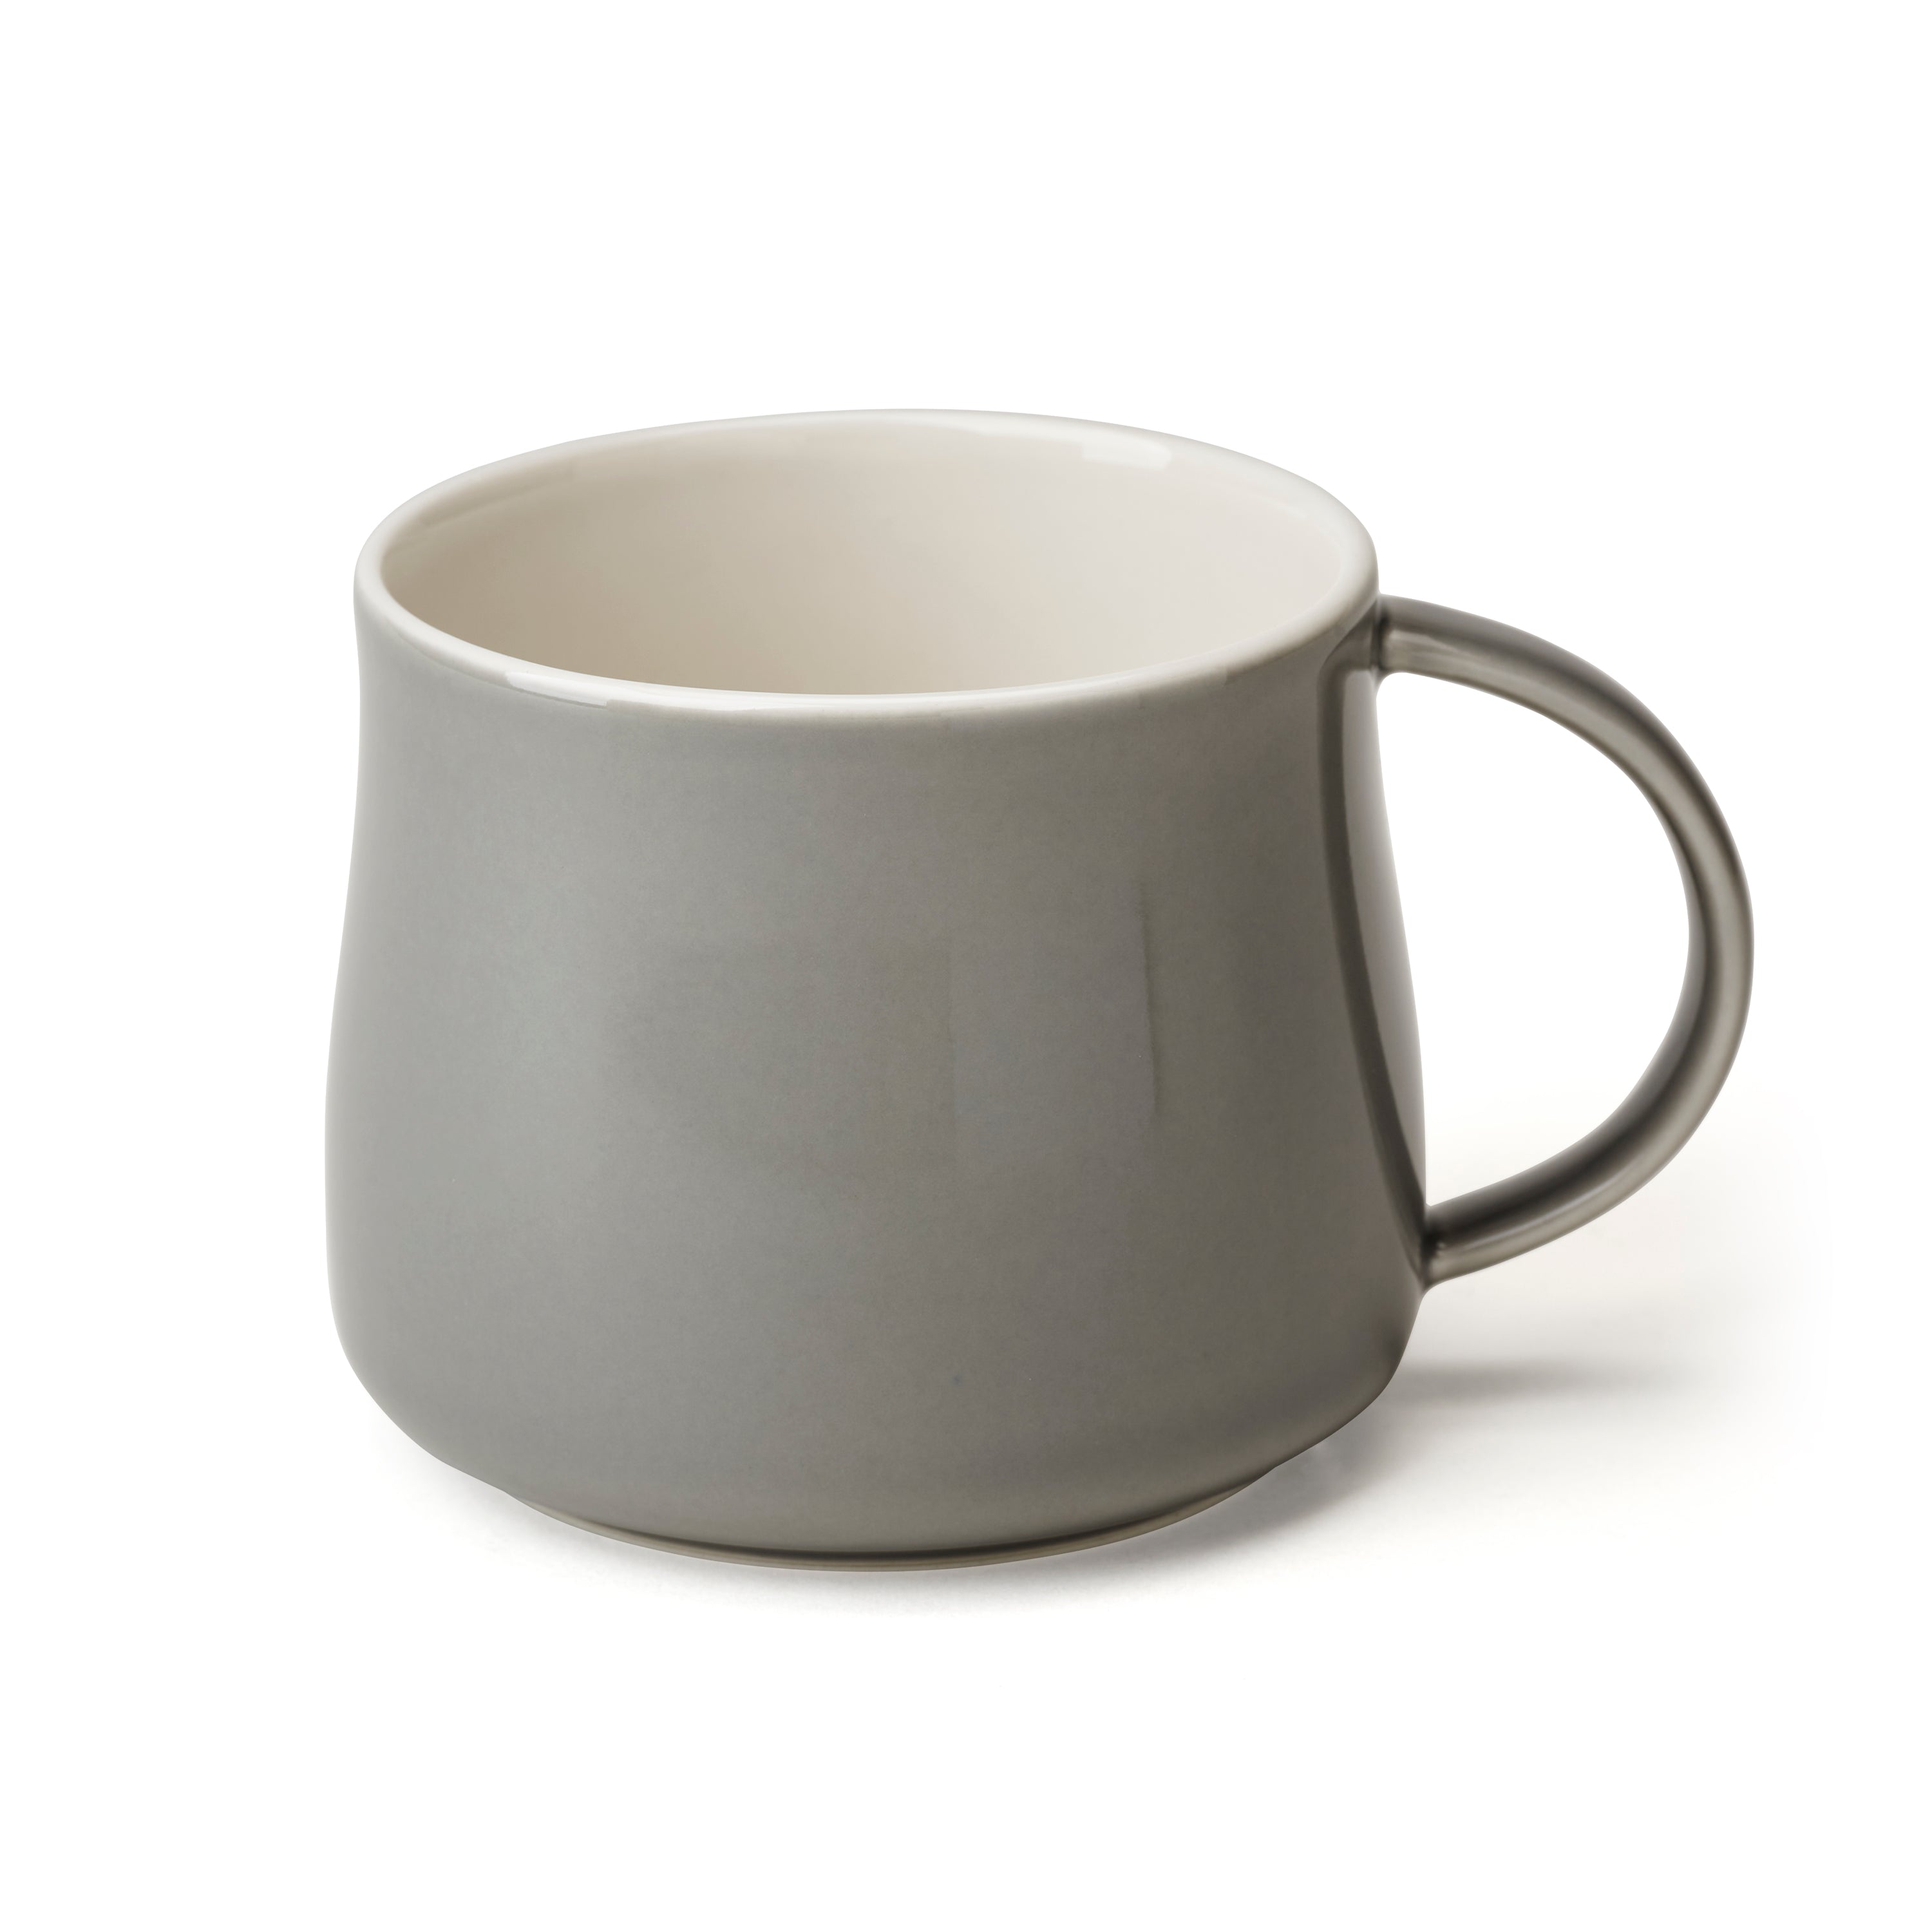 Mamaw's Coffee Milk Coffee Cup Mug, Cajun Coffee Milk or Cafe au Lait –  Cajun Trophy Wife